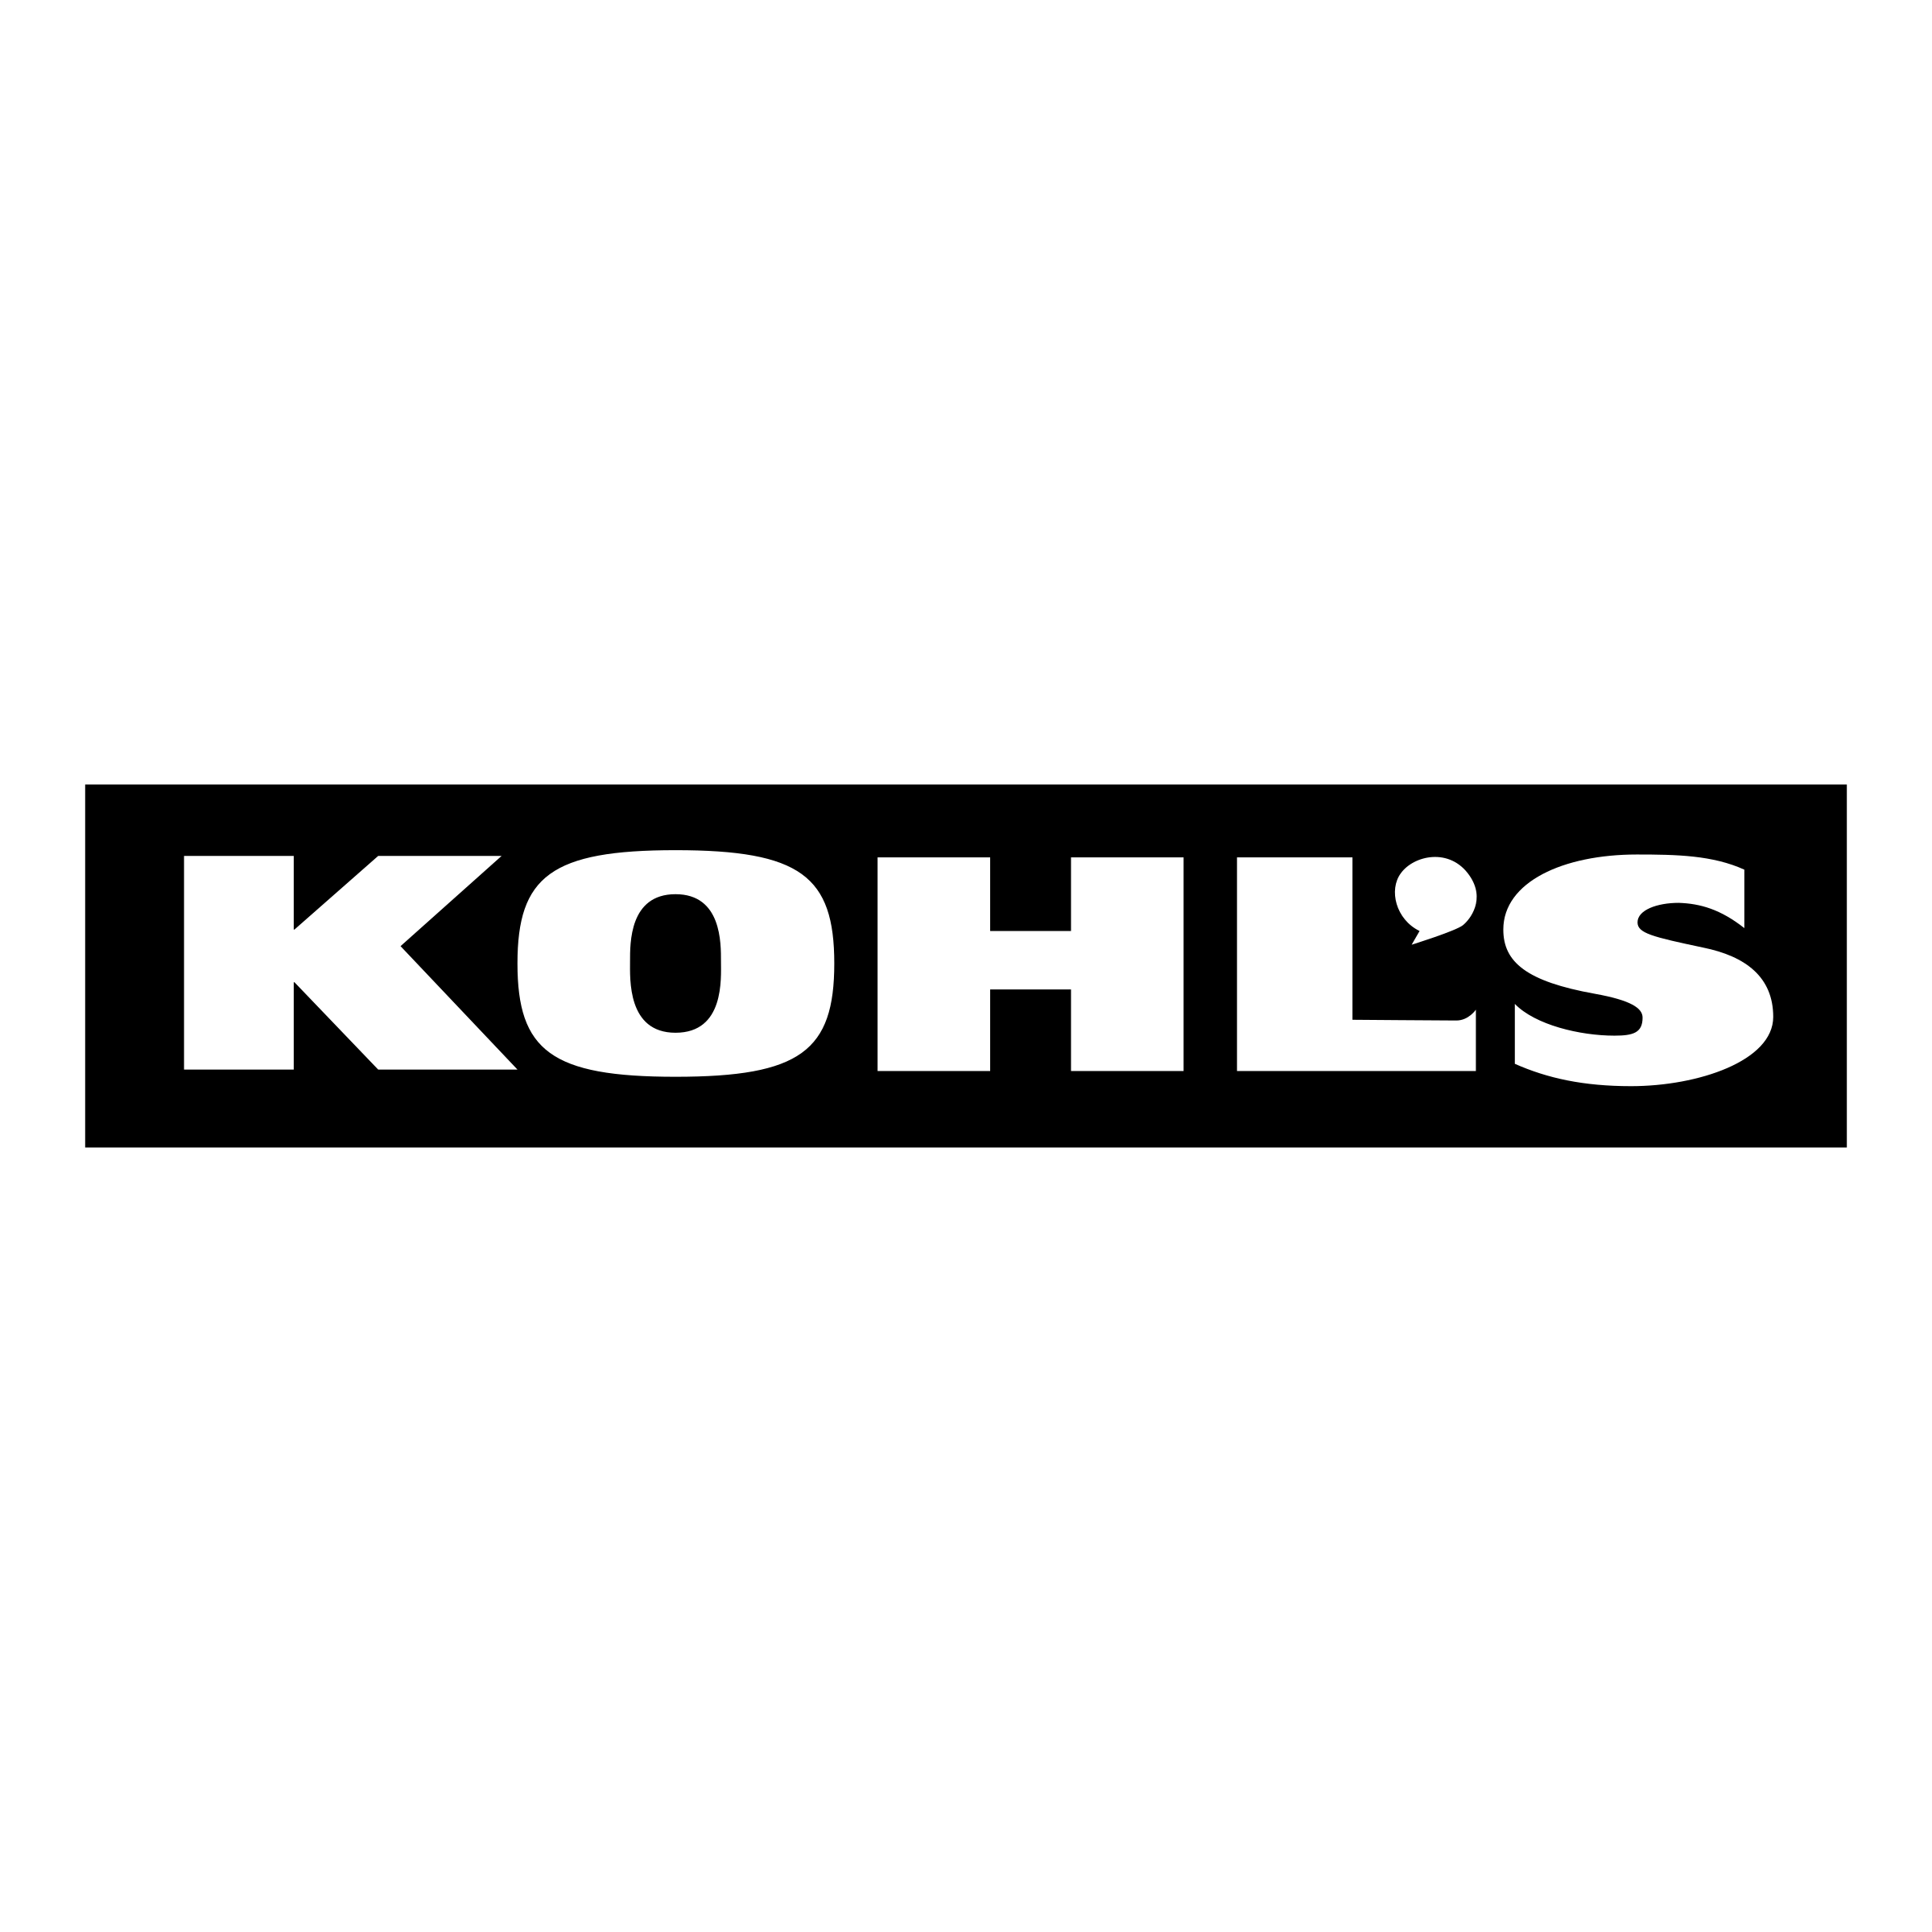 Kohls coupon codes,Kohls promo codes and deals